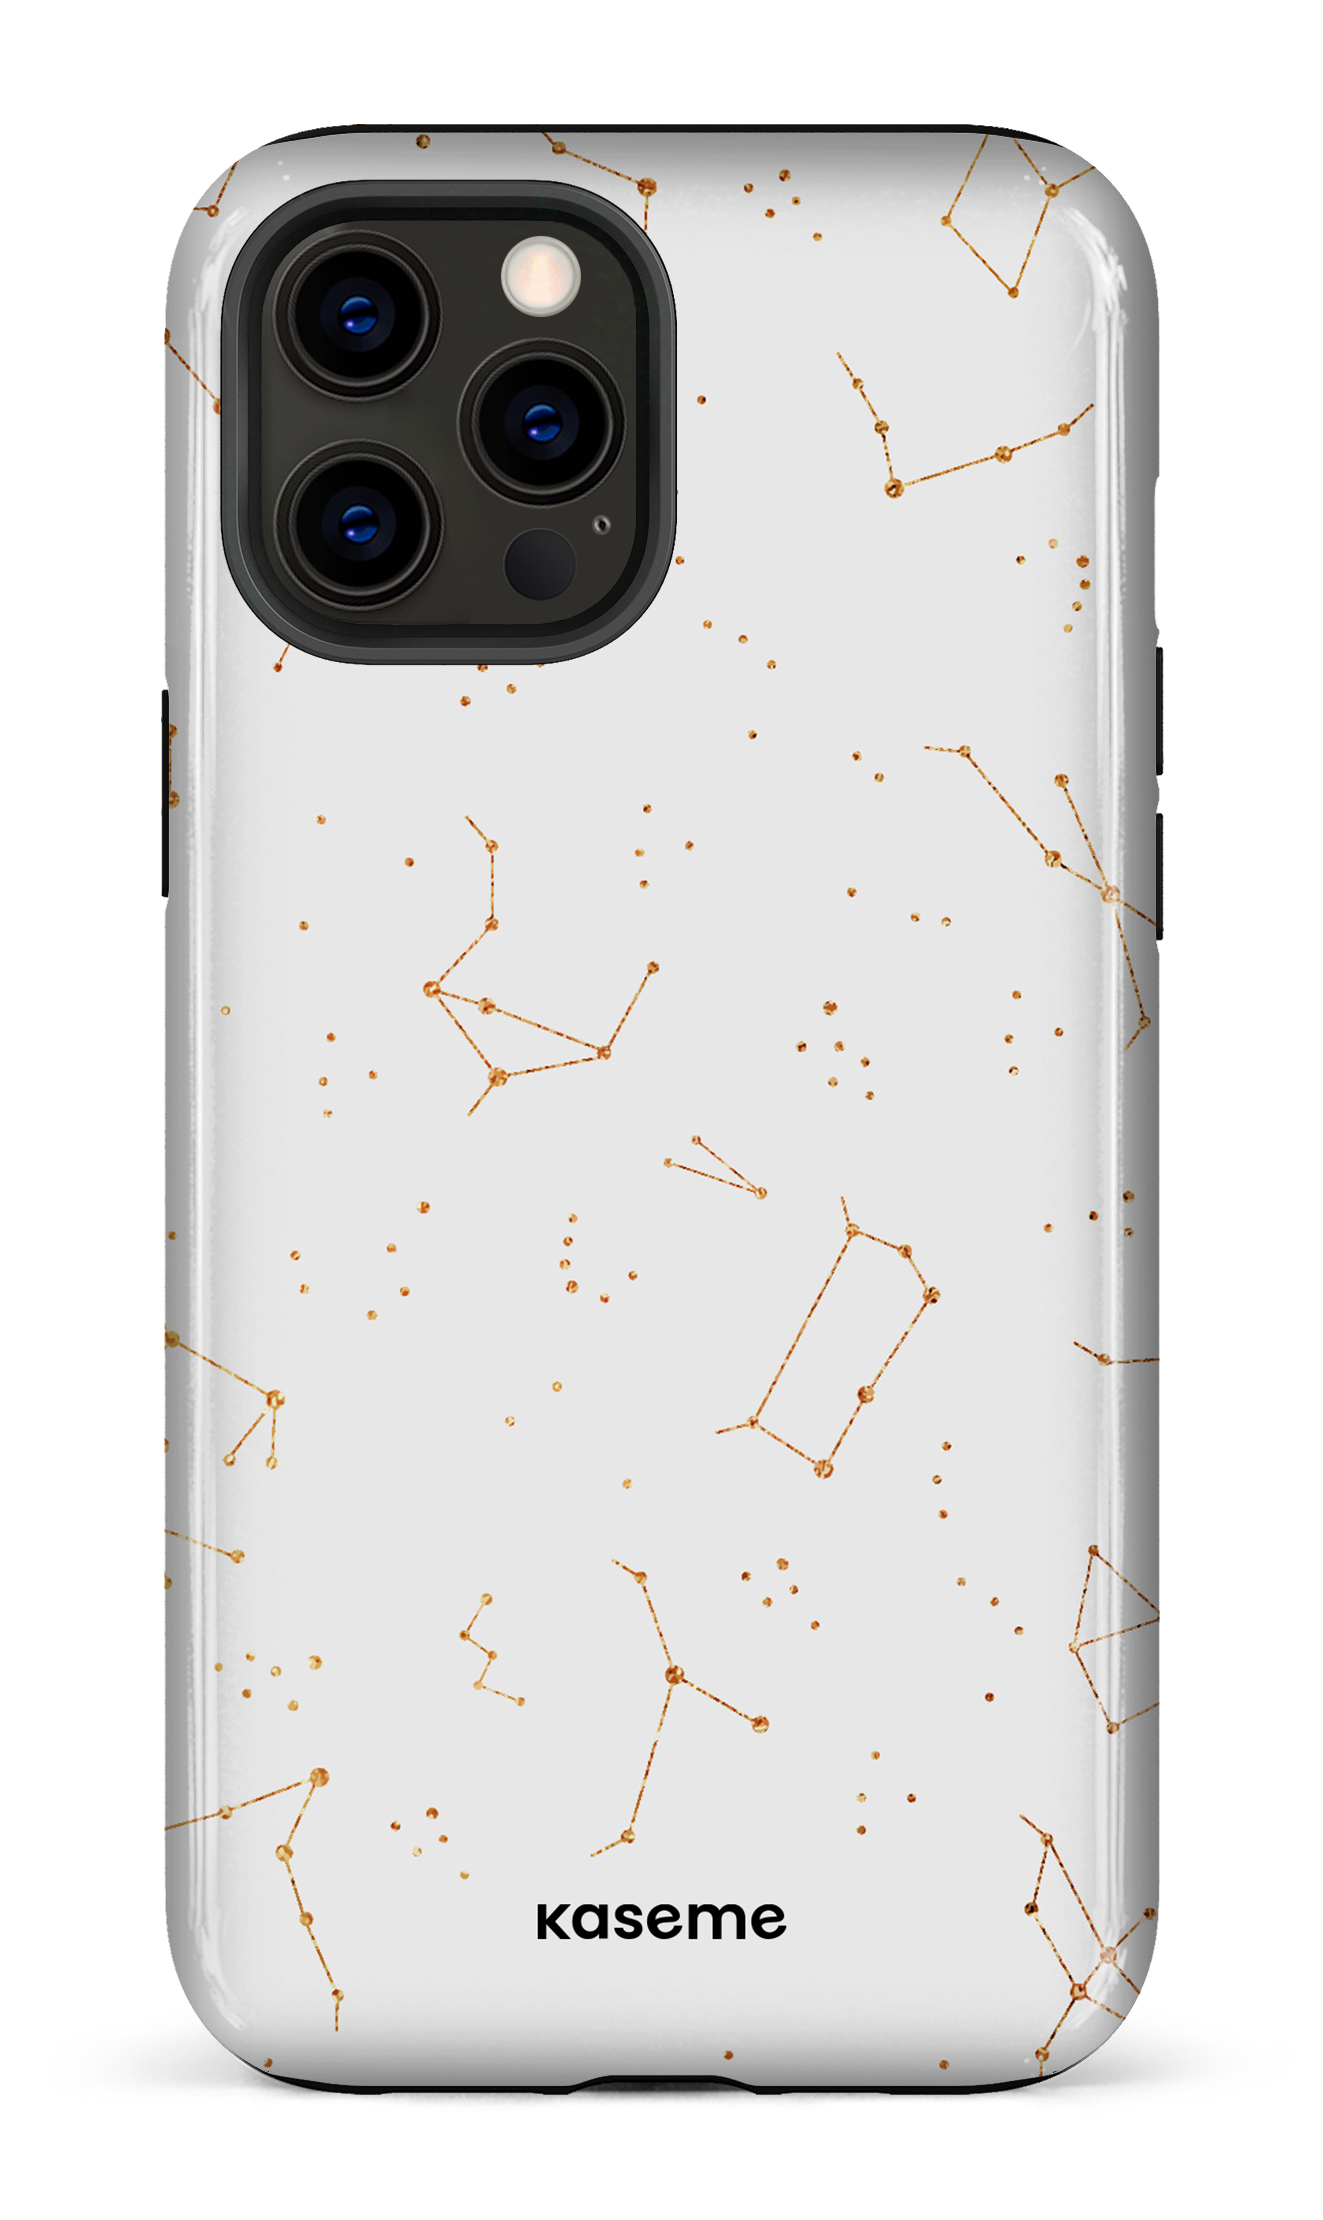 Stardust sky - iPhone 12 Pro Max